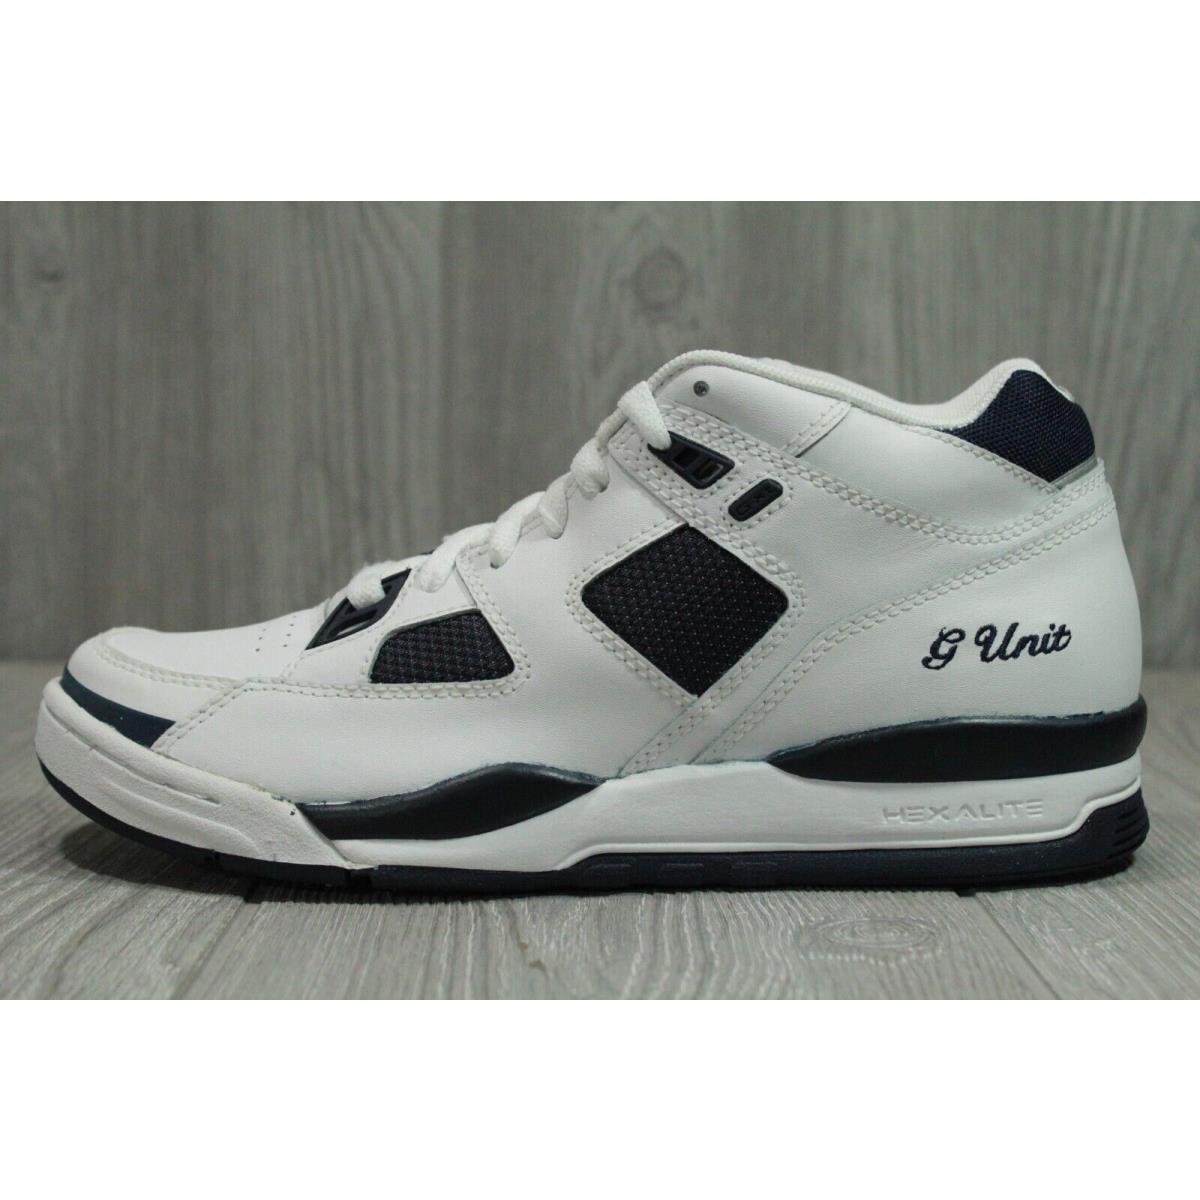 Suavemente aislamiento traducir Vintage Reebok G Unit G XT White Navy Shoes 2004 Men 5.5 Wmns 7 Oss |  047436767510 - Reebok shoes - White | SporTipTop